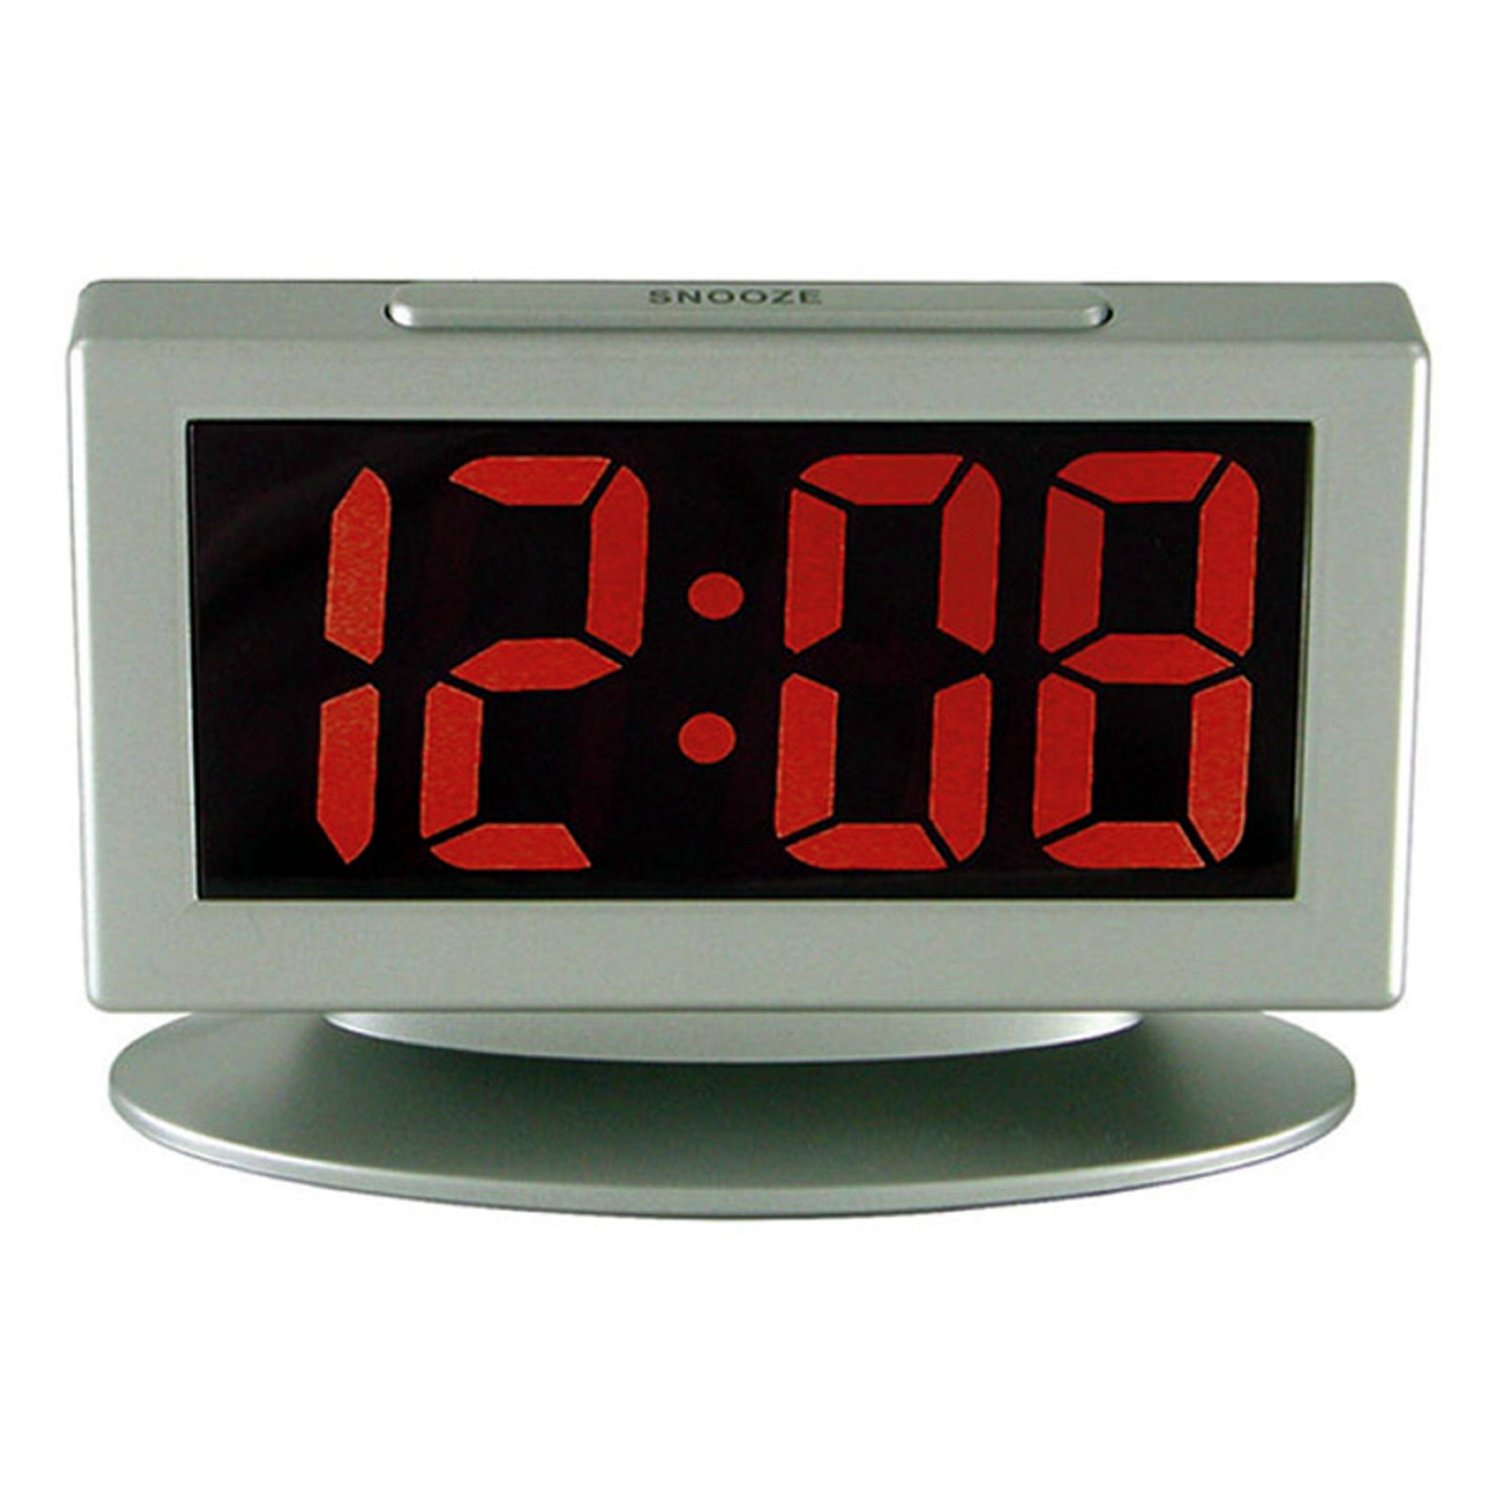 Amazon Best Sellers: Best Travel Alarm Clocks